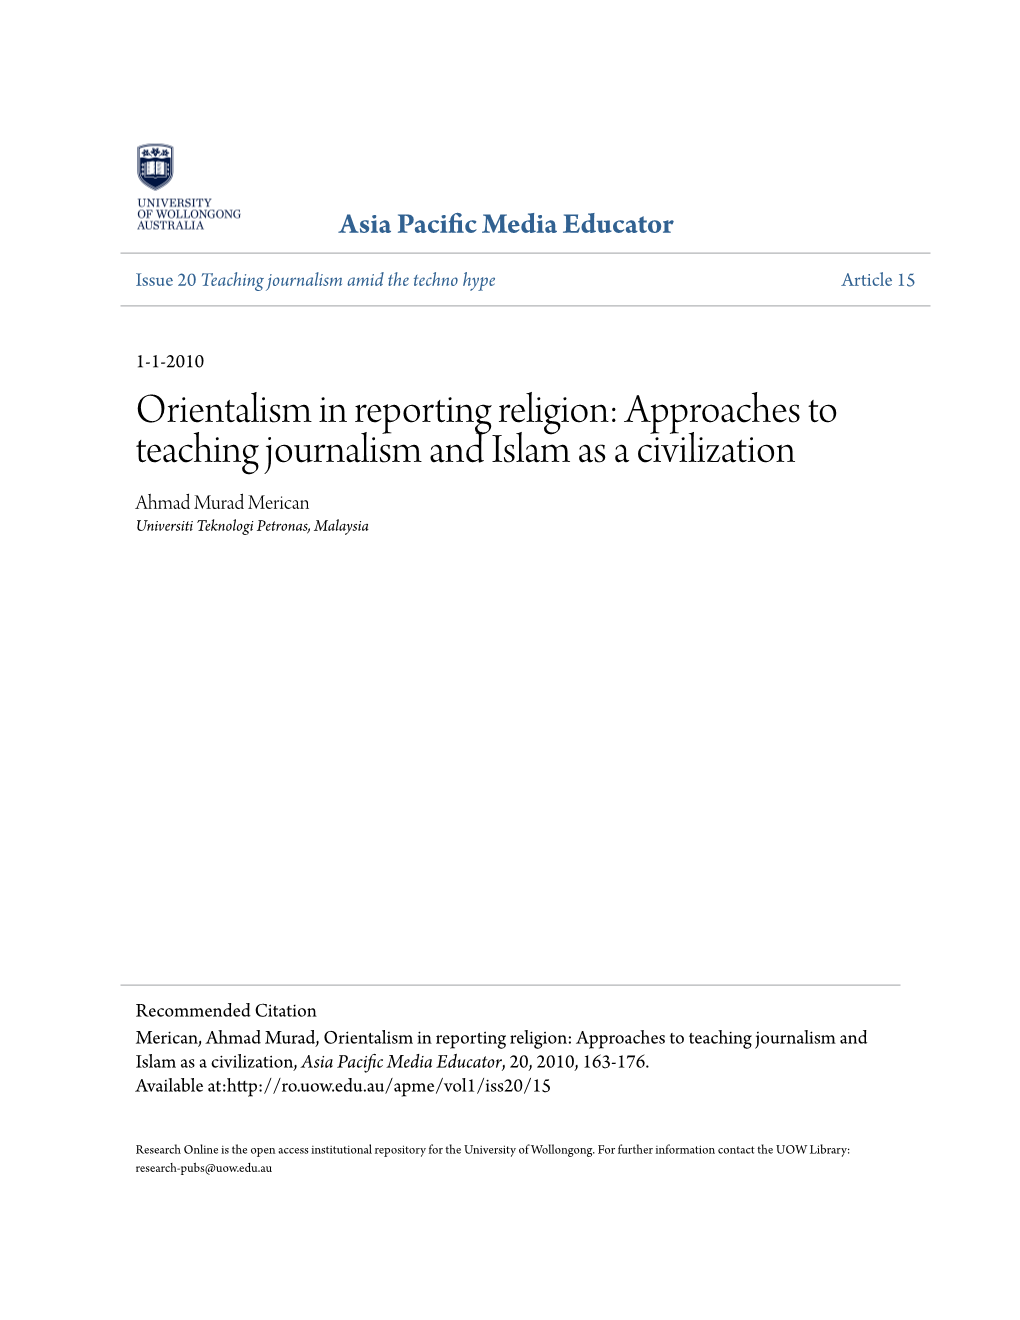 Orientalism in Reporting Religion: Approaches to Teaching Journalism and Islam As a Civilization Ahmad Murad Merican Universiti Teknologi Petronas, Malaysia